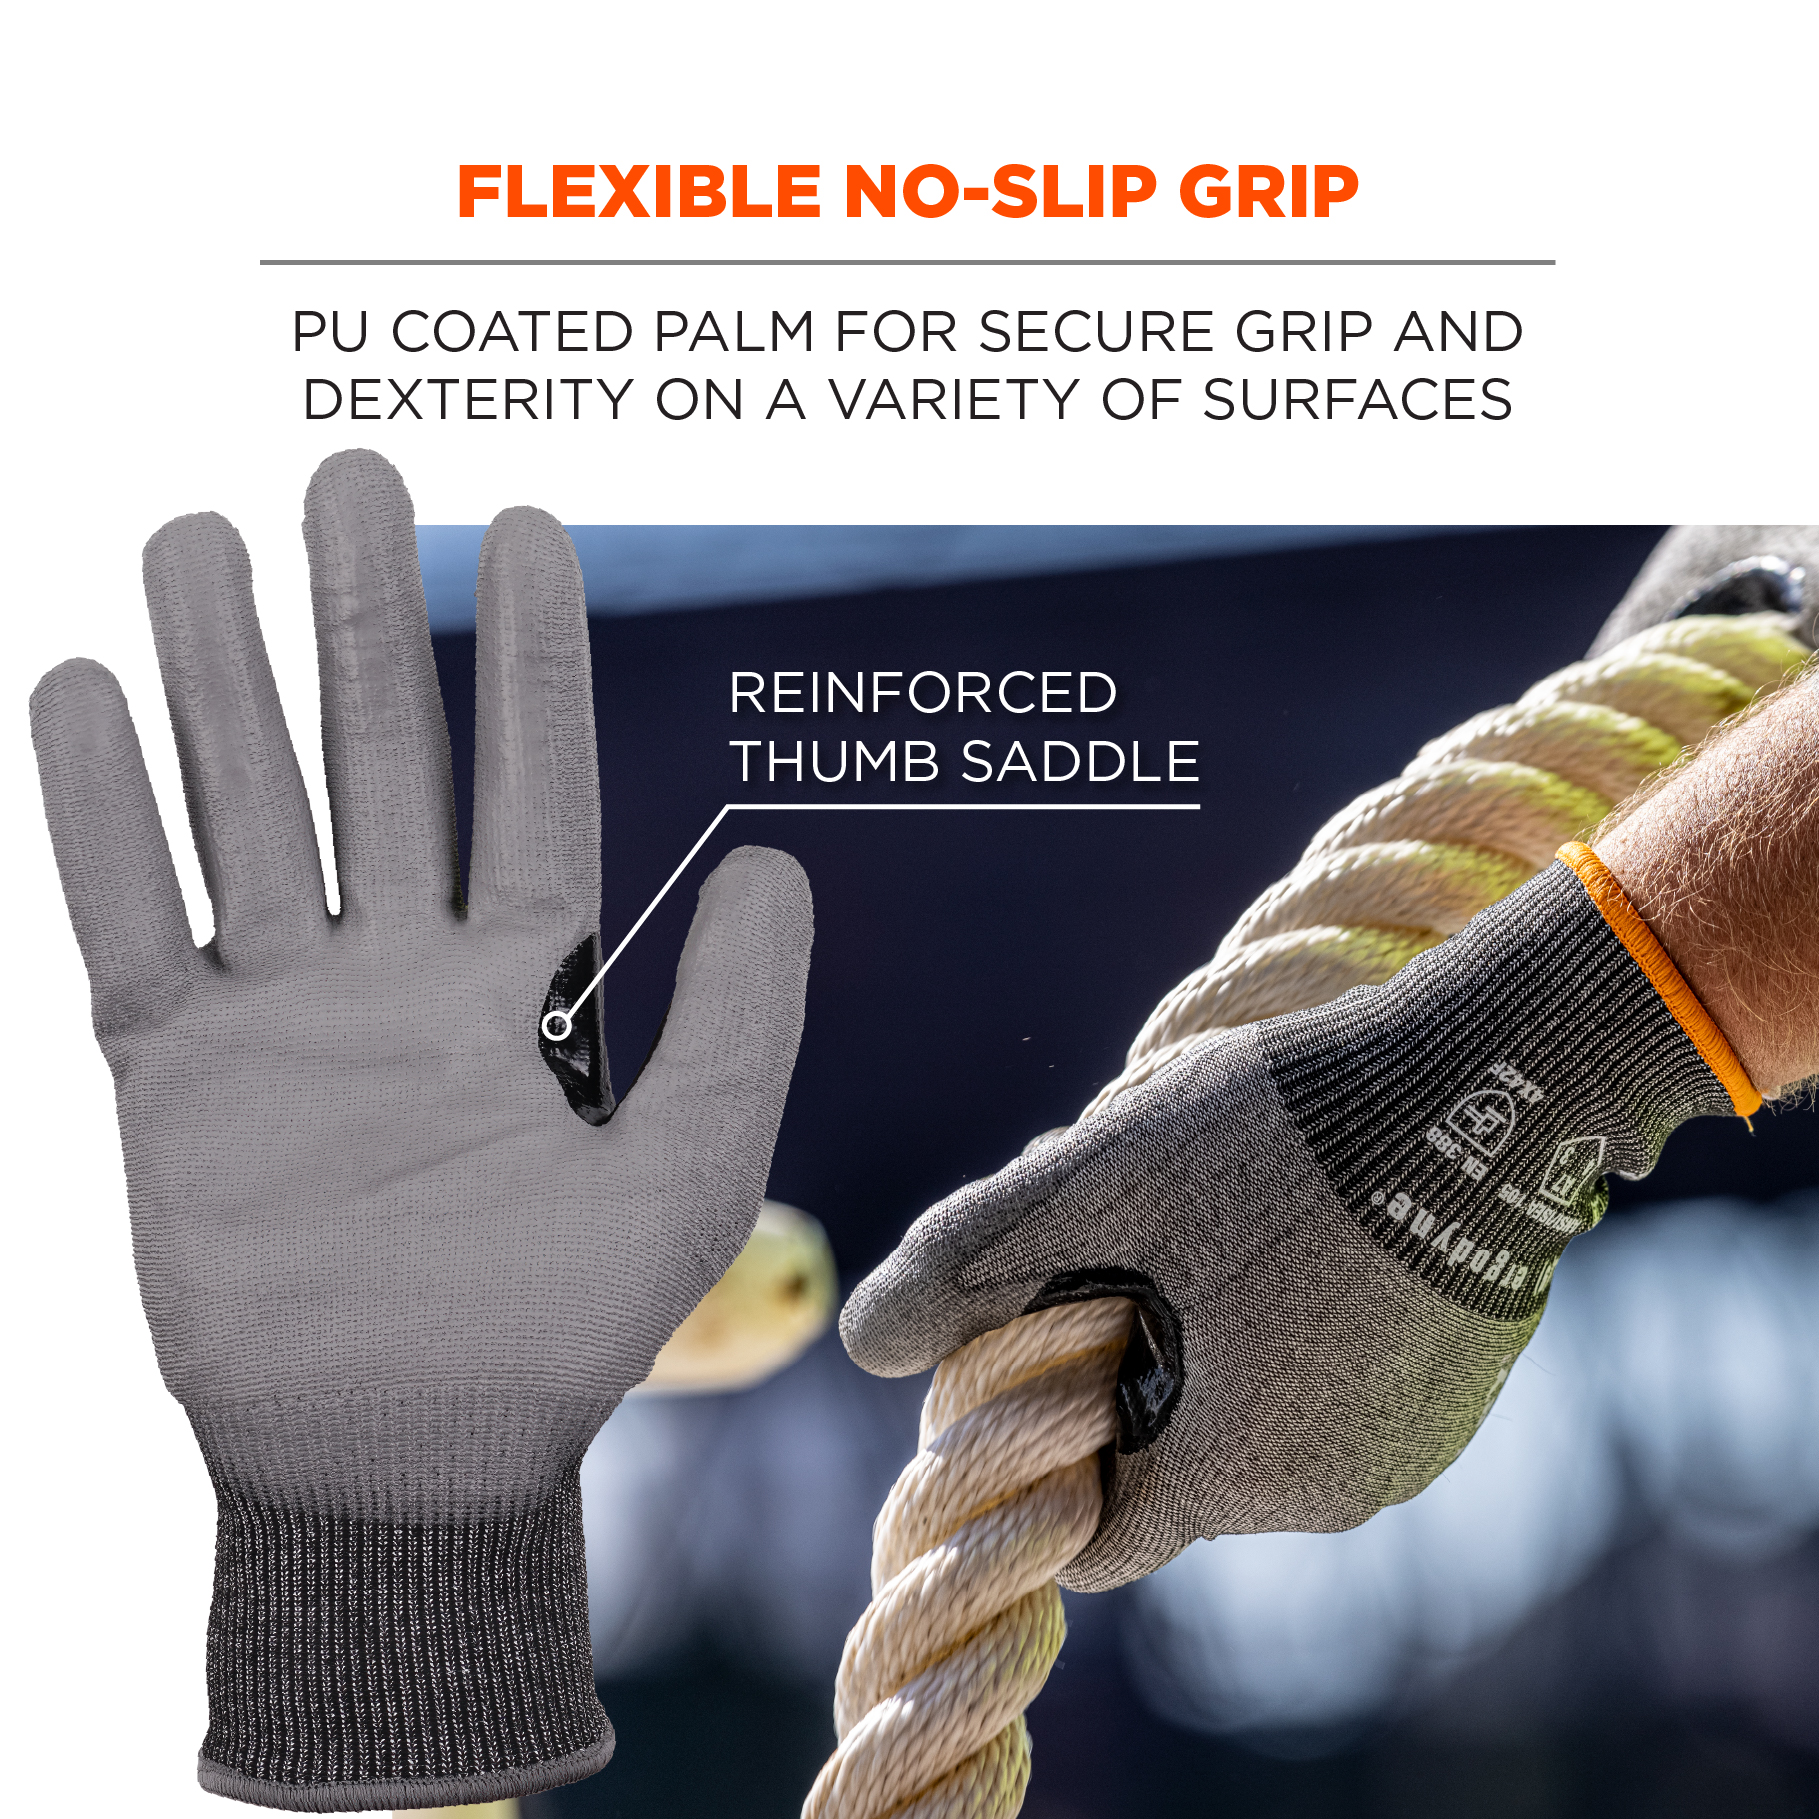 https://www.ergodyne.com/sites/default/files/product-images/18072-7071-ansi-a7-pu-coated-cr-gloves-gray-flexible-no-slip-grip_1.jpg